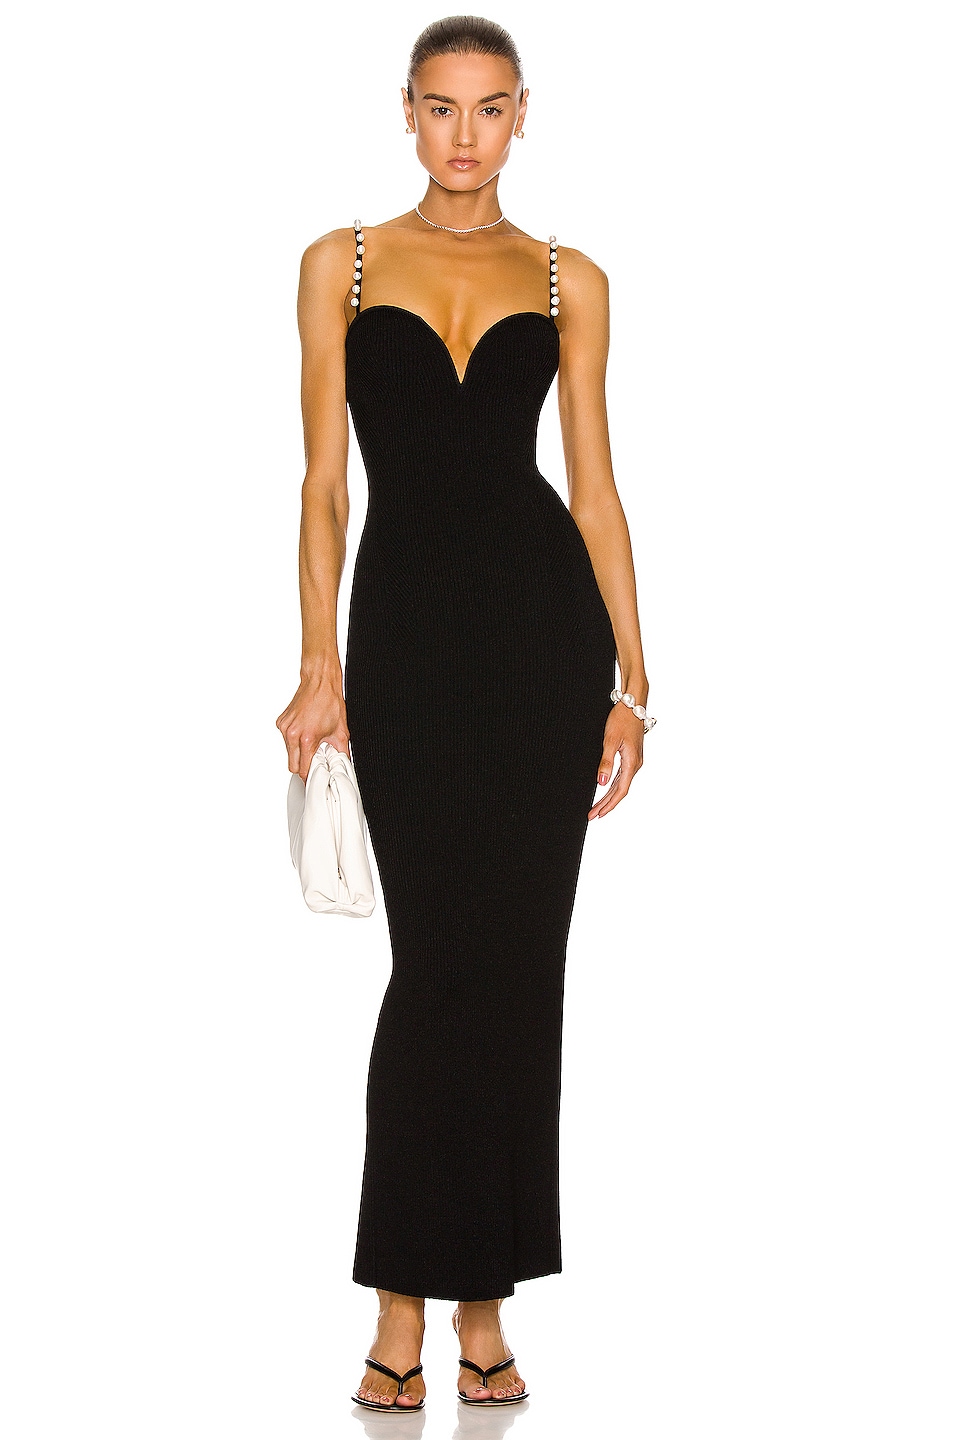 GALVAN Thalia Pearl Dress in Black | FWRD